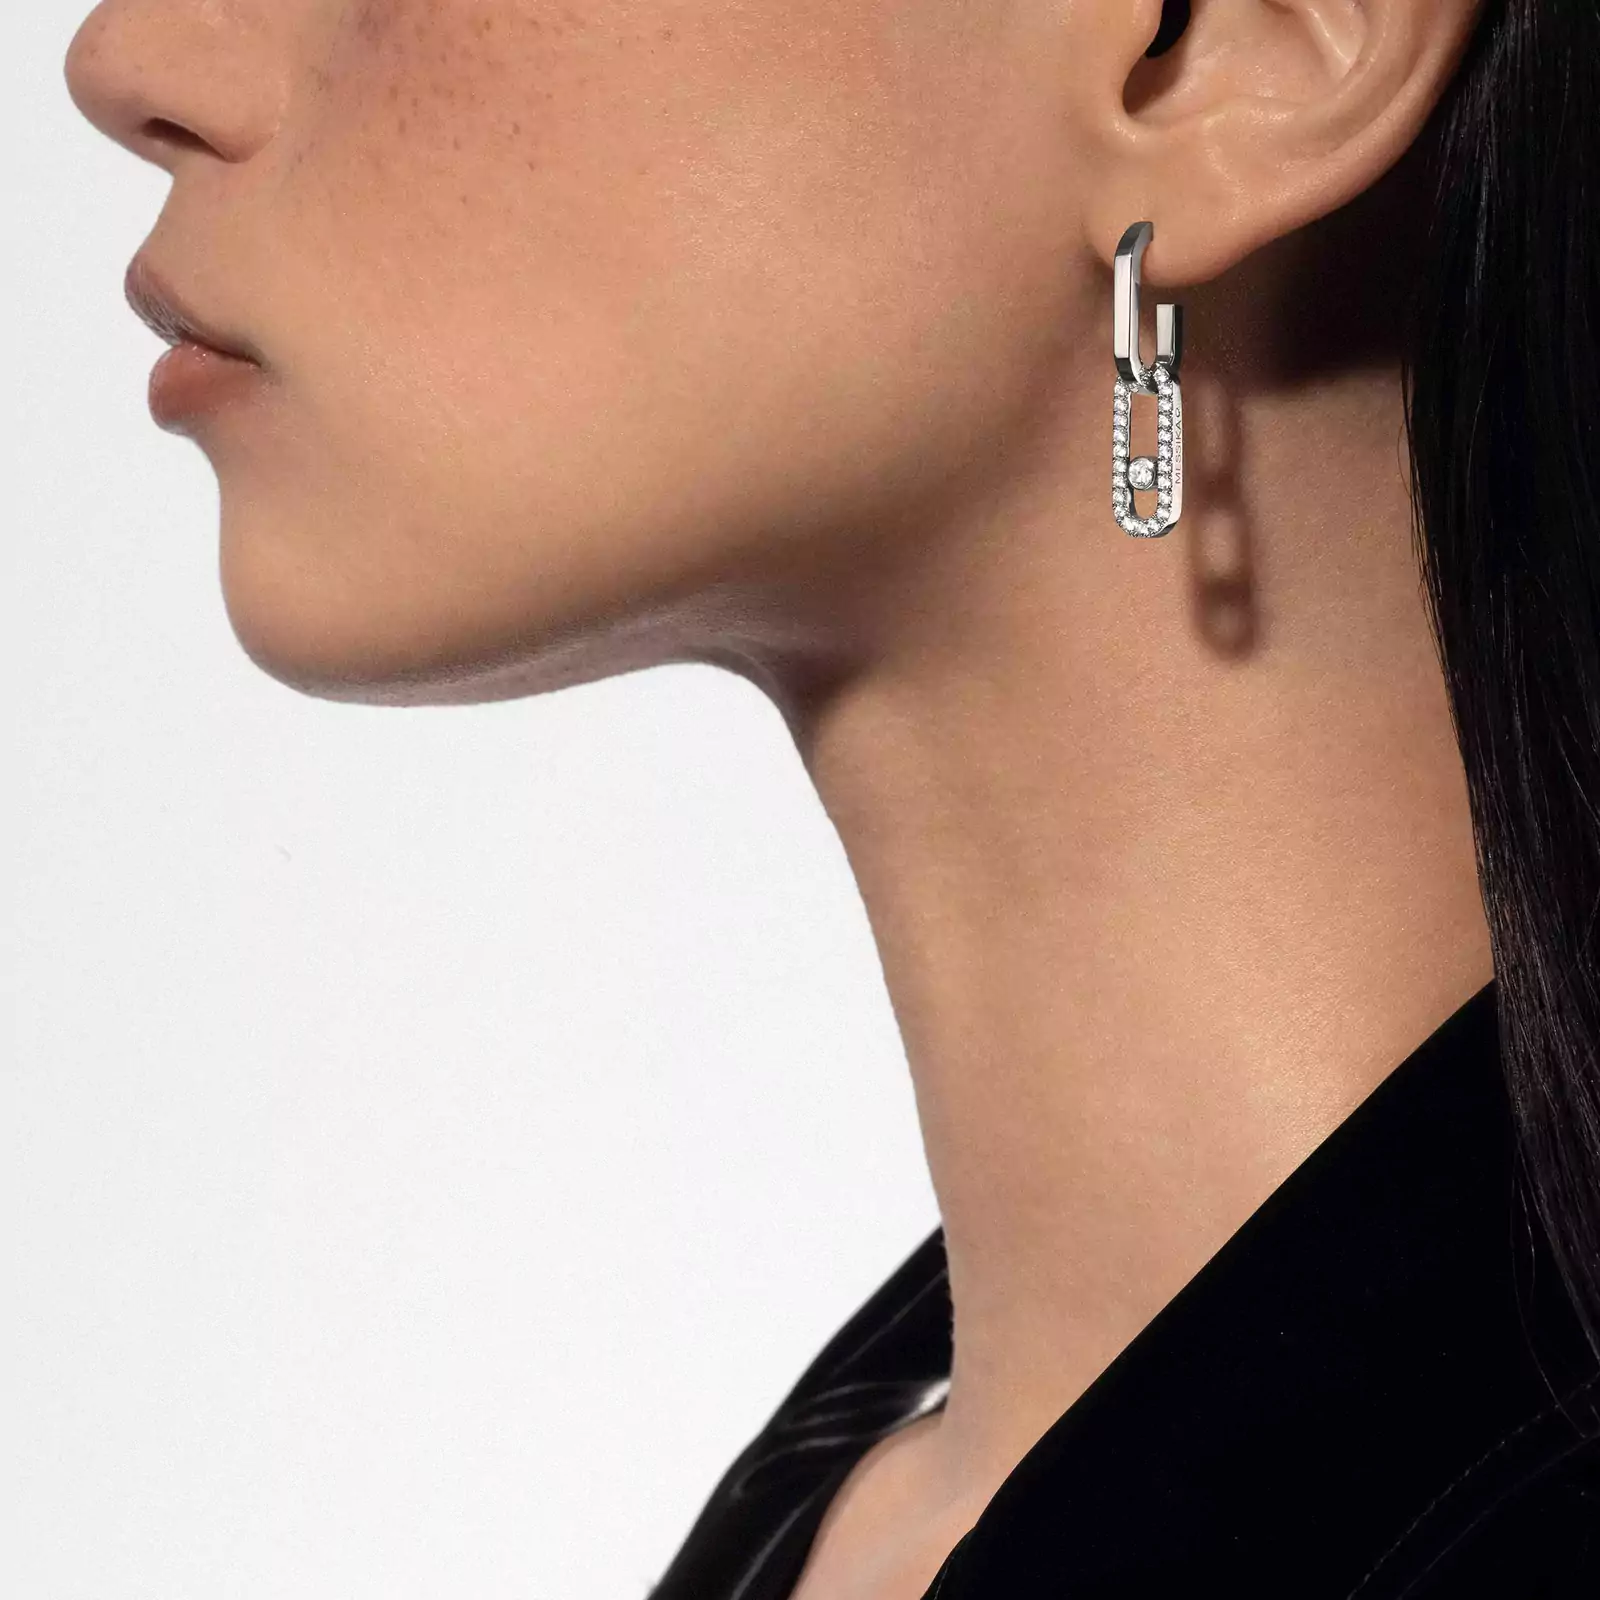 Earrings For Her White Gold Diamond Move Link 12469-WG